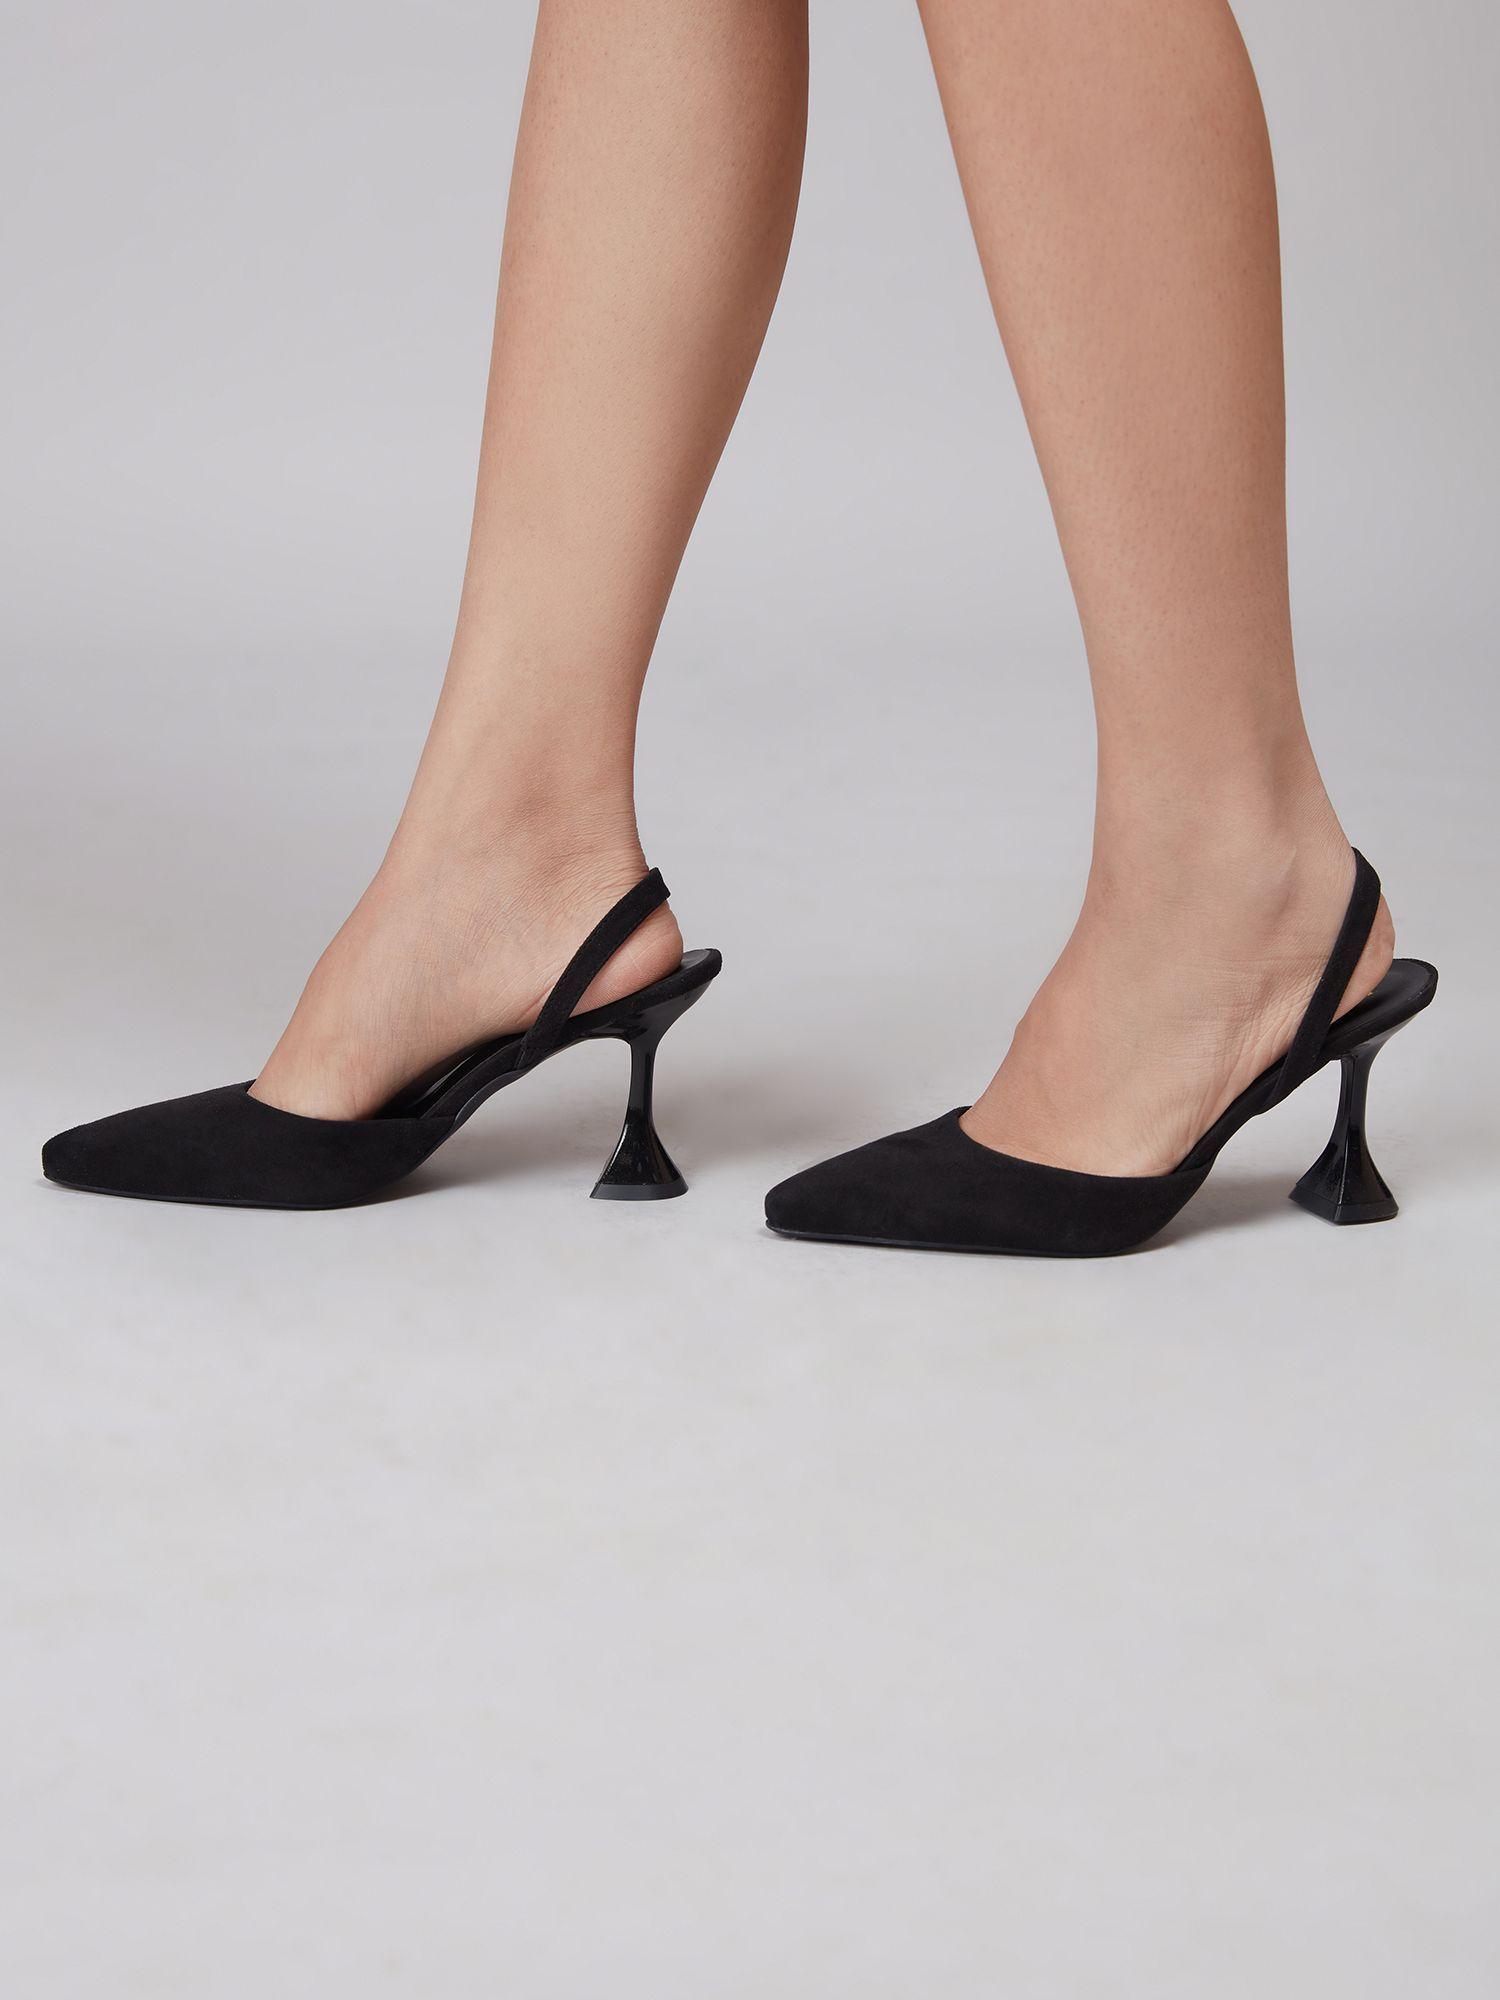 black pointed flared heels